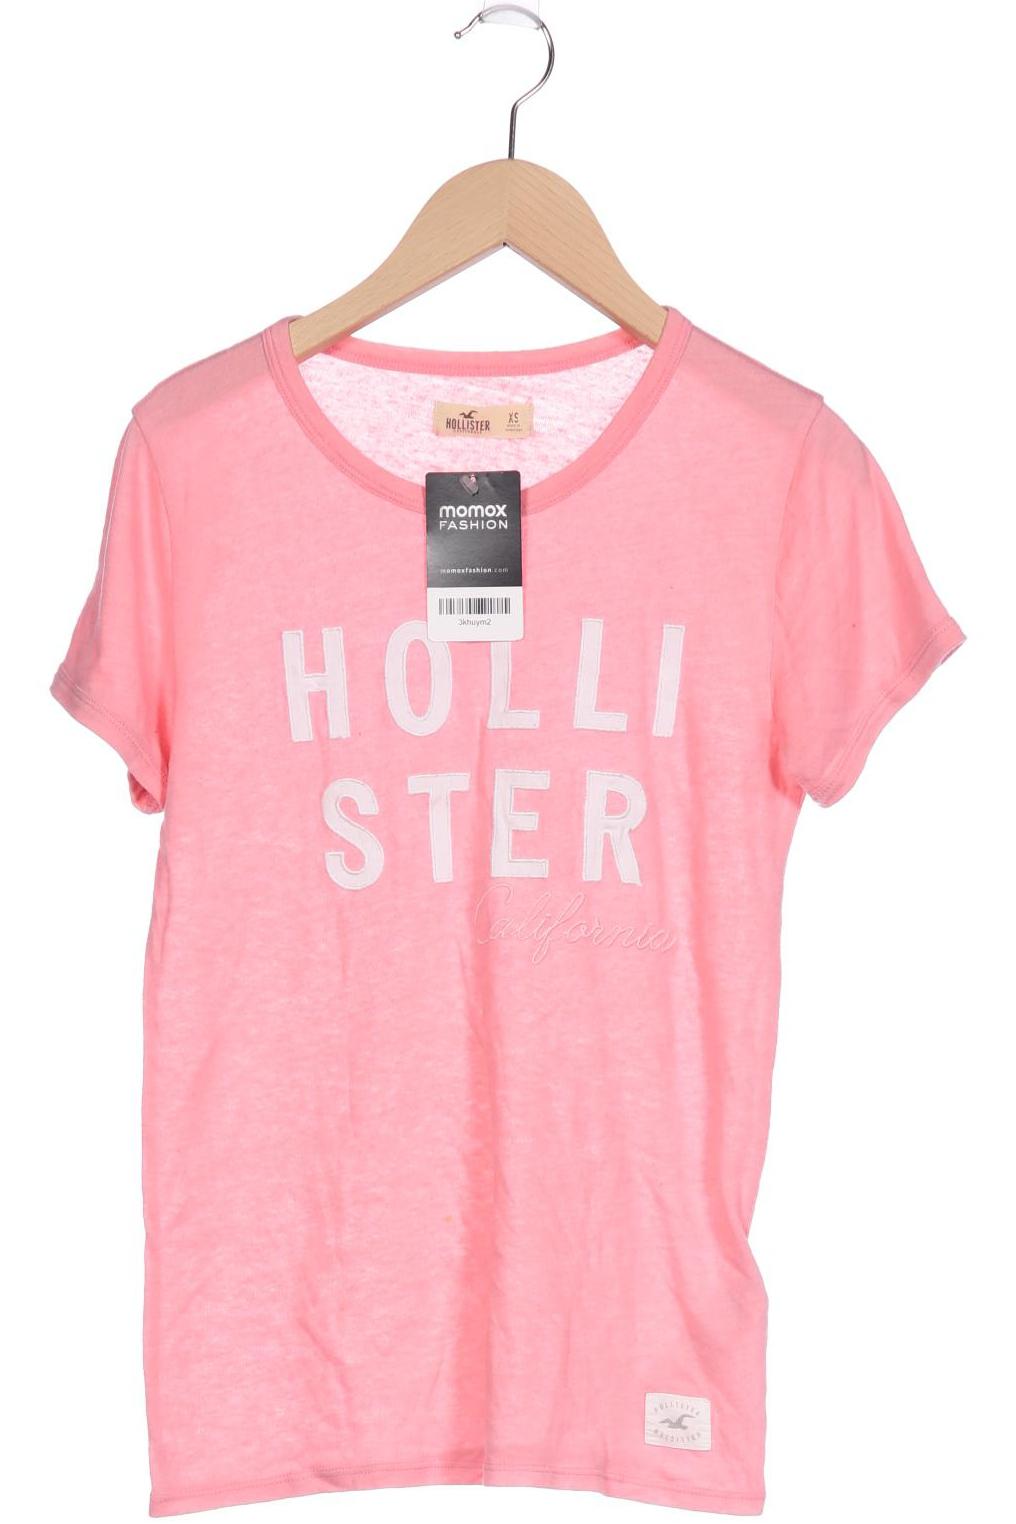 Hollister Damen T-Shirt, pink von Hollister